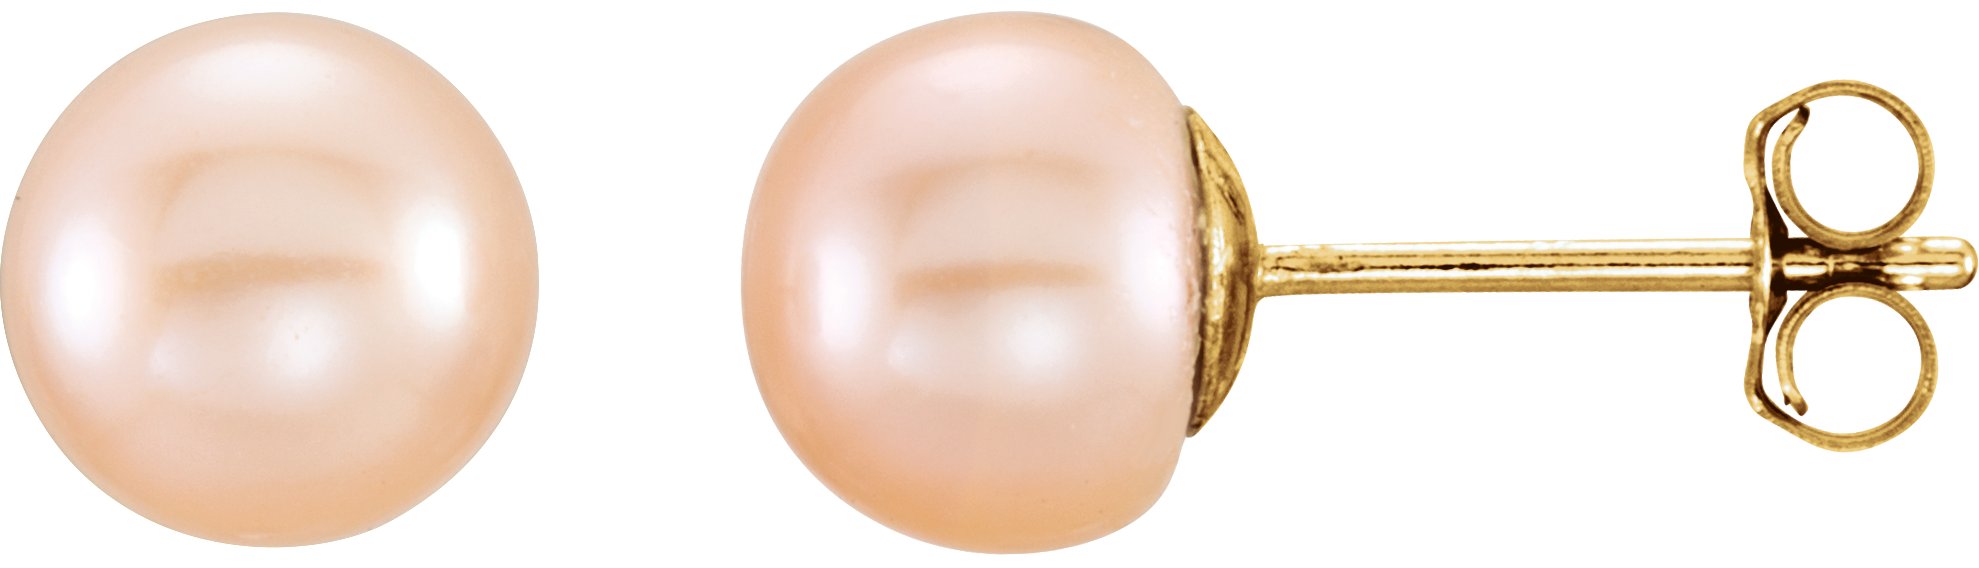 14K Yellow 6-7 mm Cultured Pink Freshwater Pearl Earrings